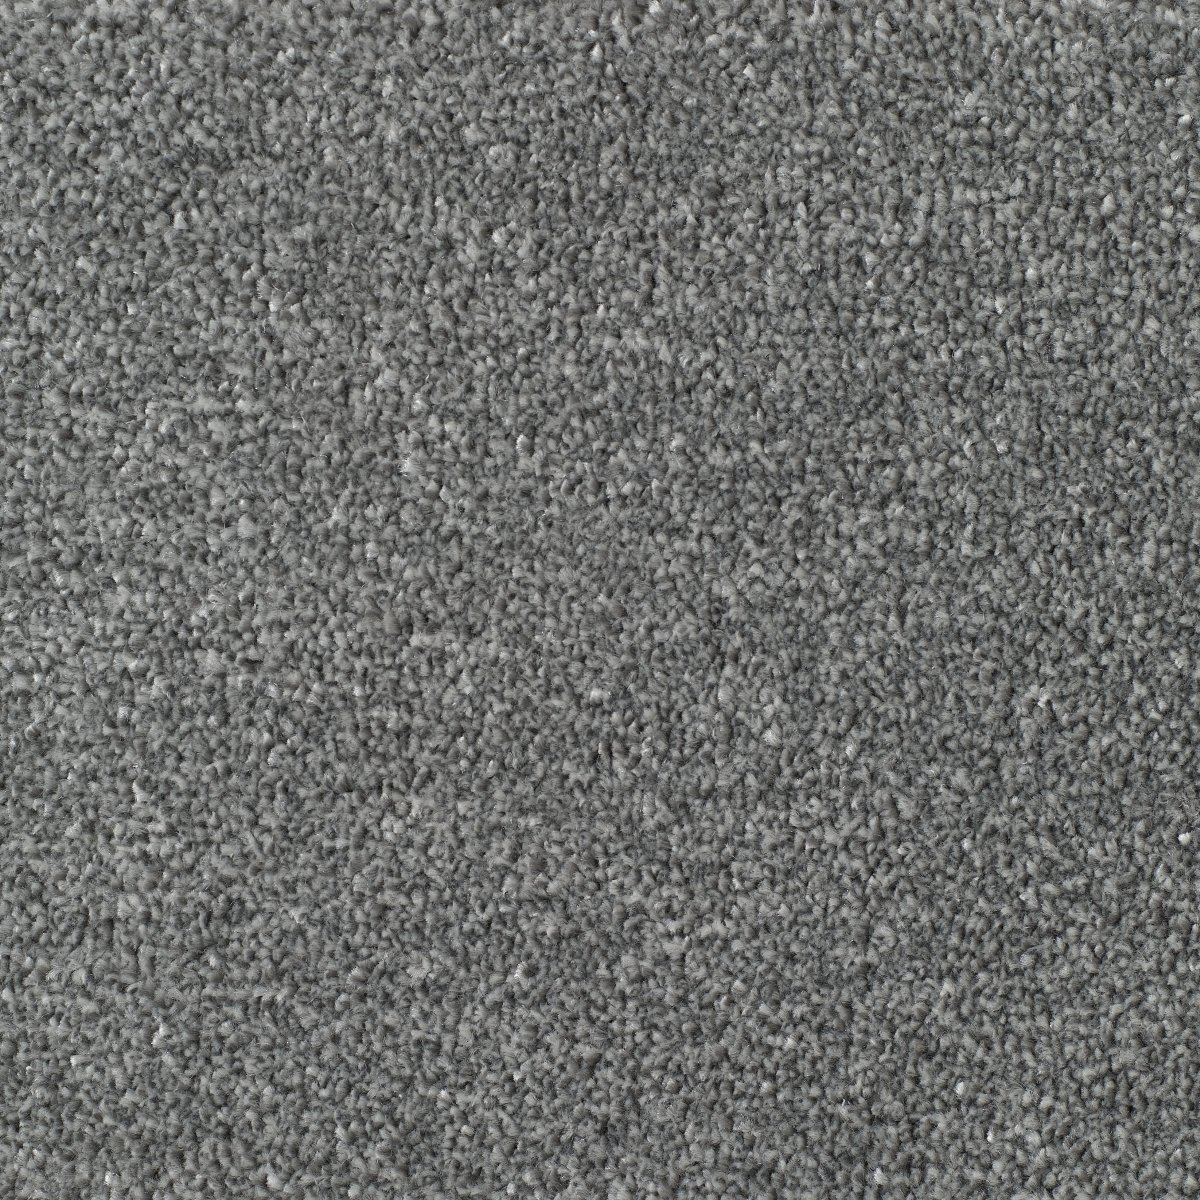 Seaton Valley Soft Deep Pile Saxony Carpet -  Grey